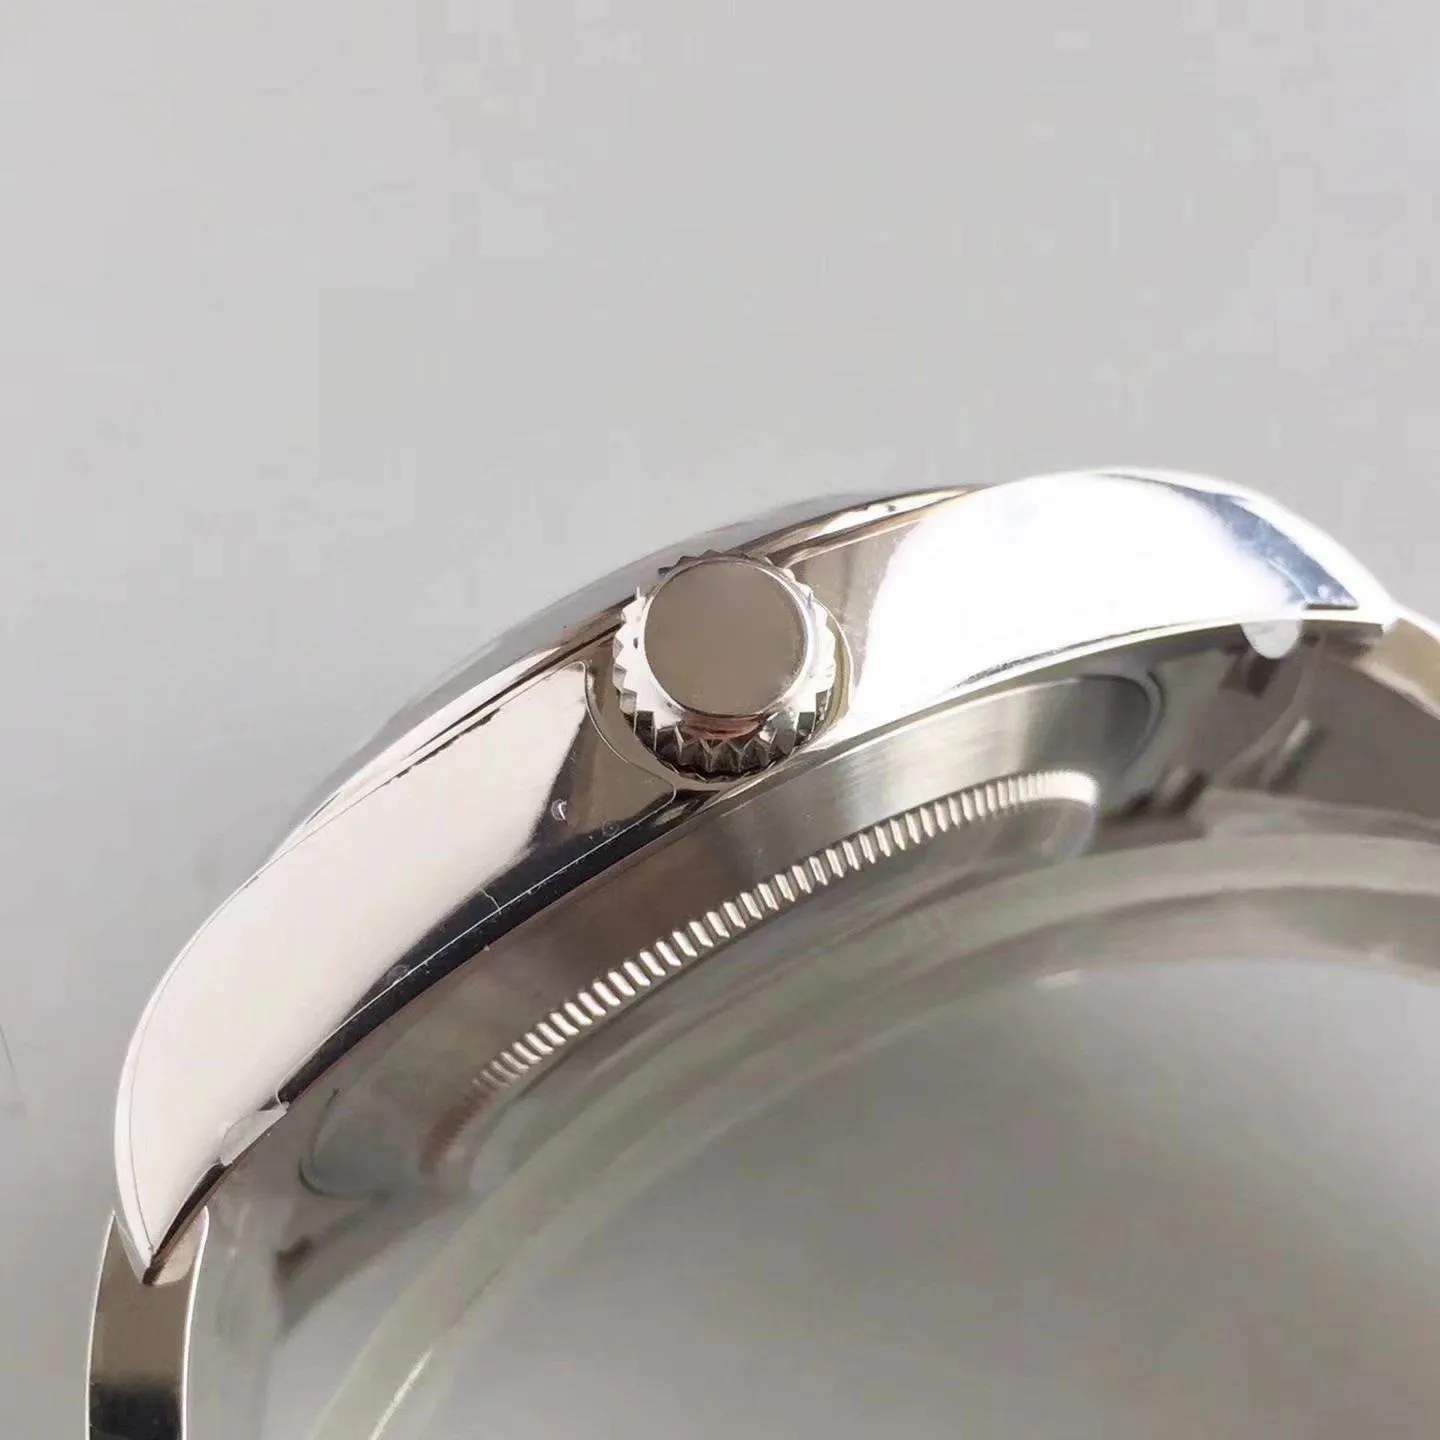 Air men relógios mecânico movimento automático rei relógio premium 40mm aço inoxidável safira vidro potência luminosa água resistan285e